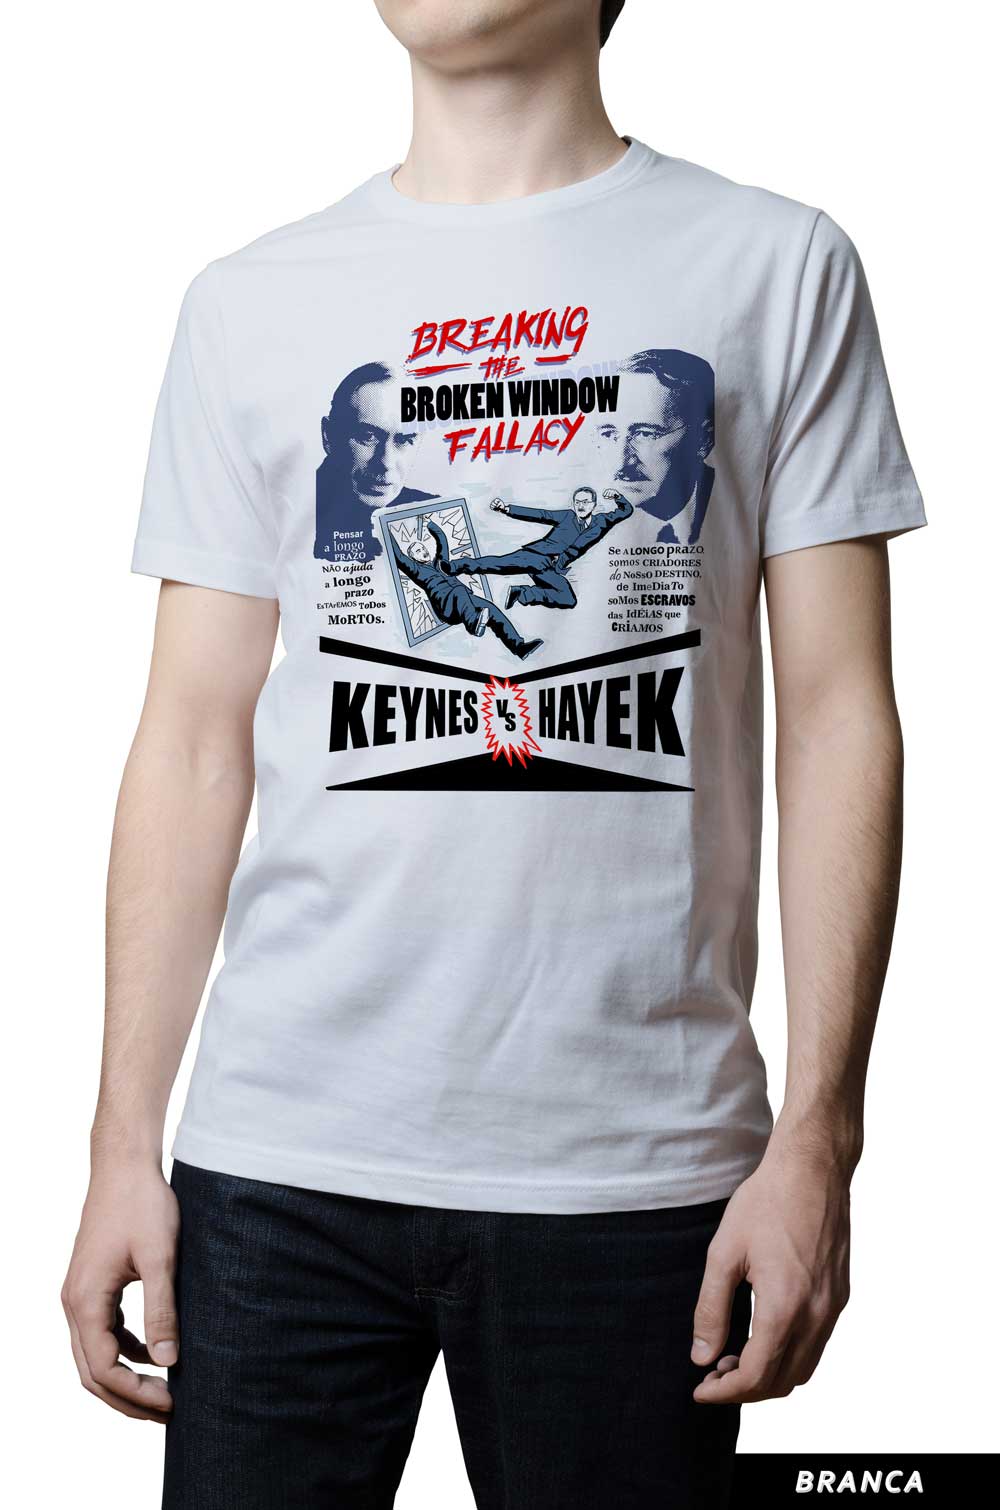 Camiseta - Keynes vs Hayek: Breaking the Broken Window Fallacy